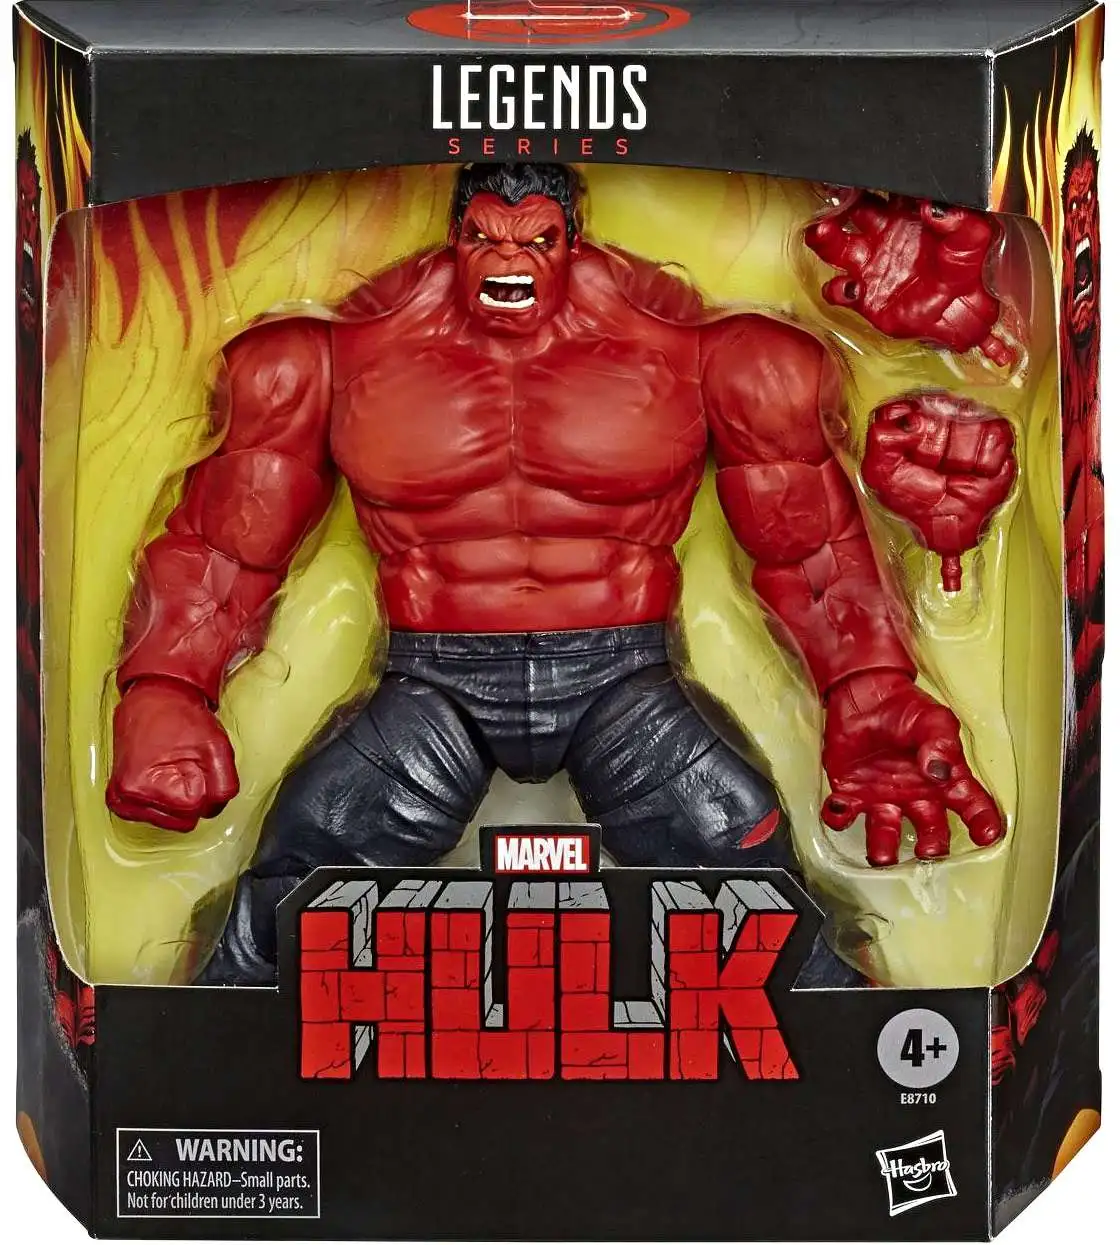 Marvel Legends Series Red Hulk 6 inch Action Figure 087-16-1602 for sale online 